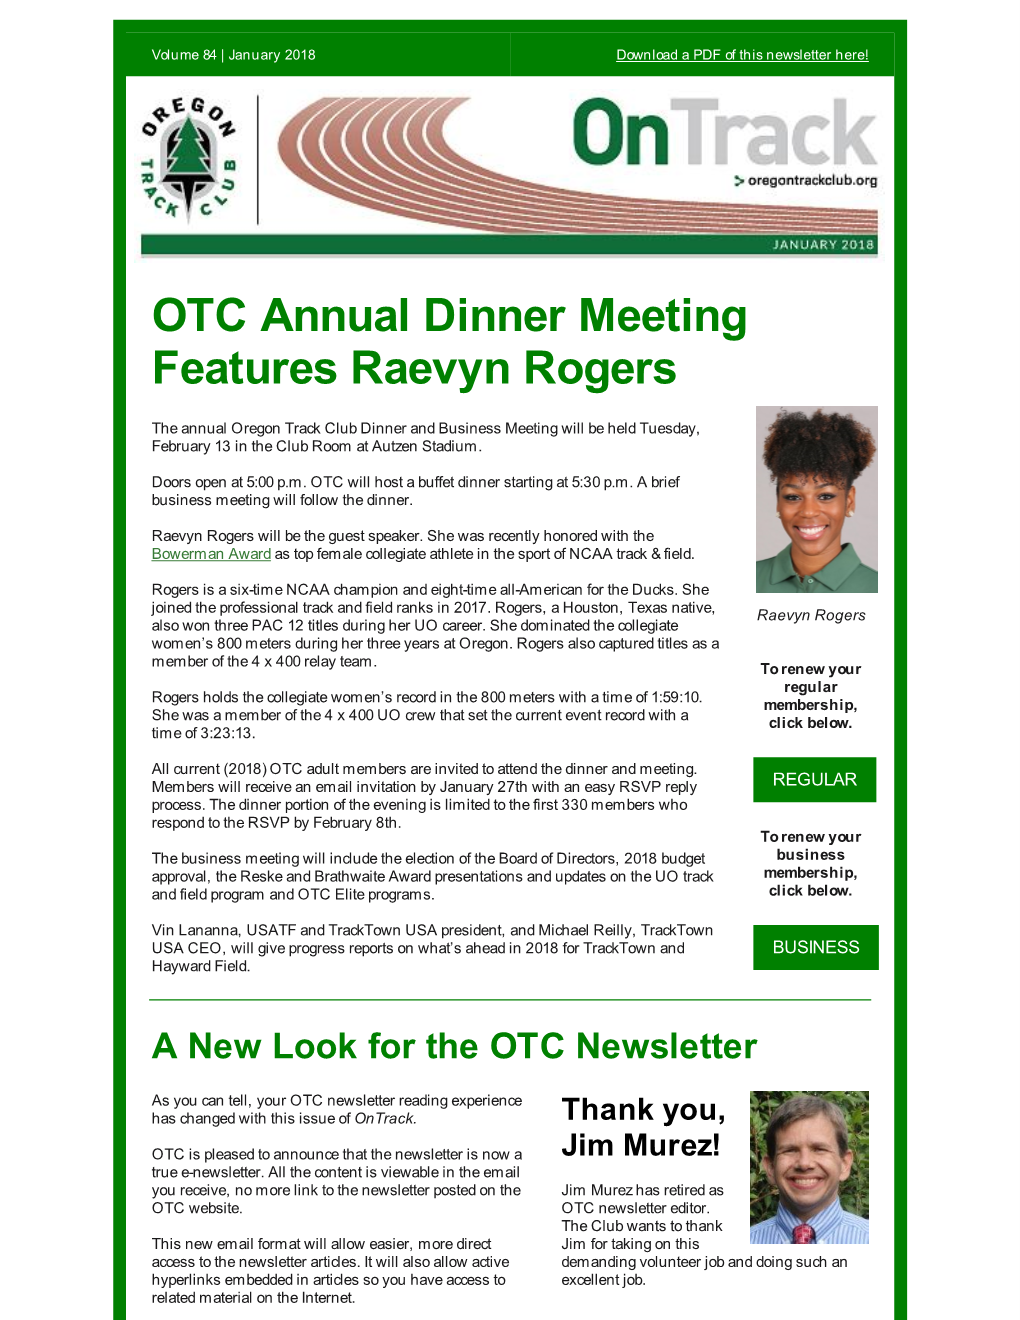 OTC Annual Dinner Meeting Features Raevyn Rogers